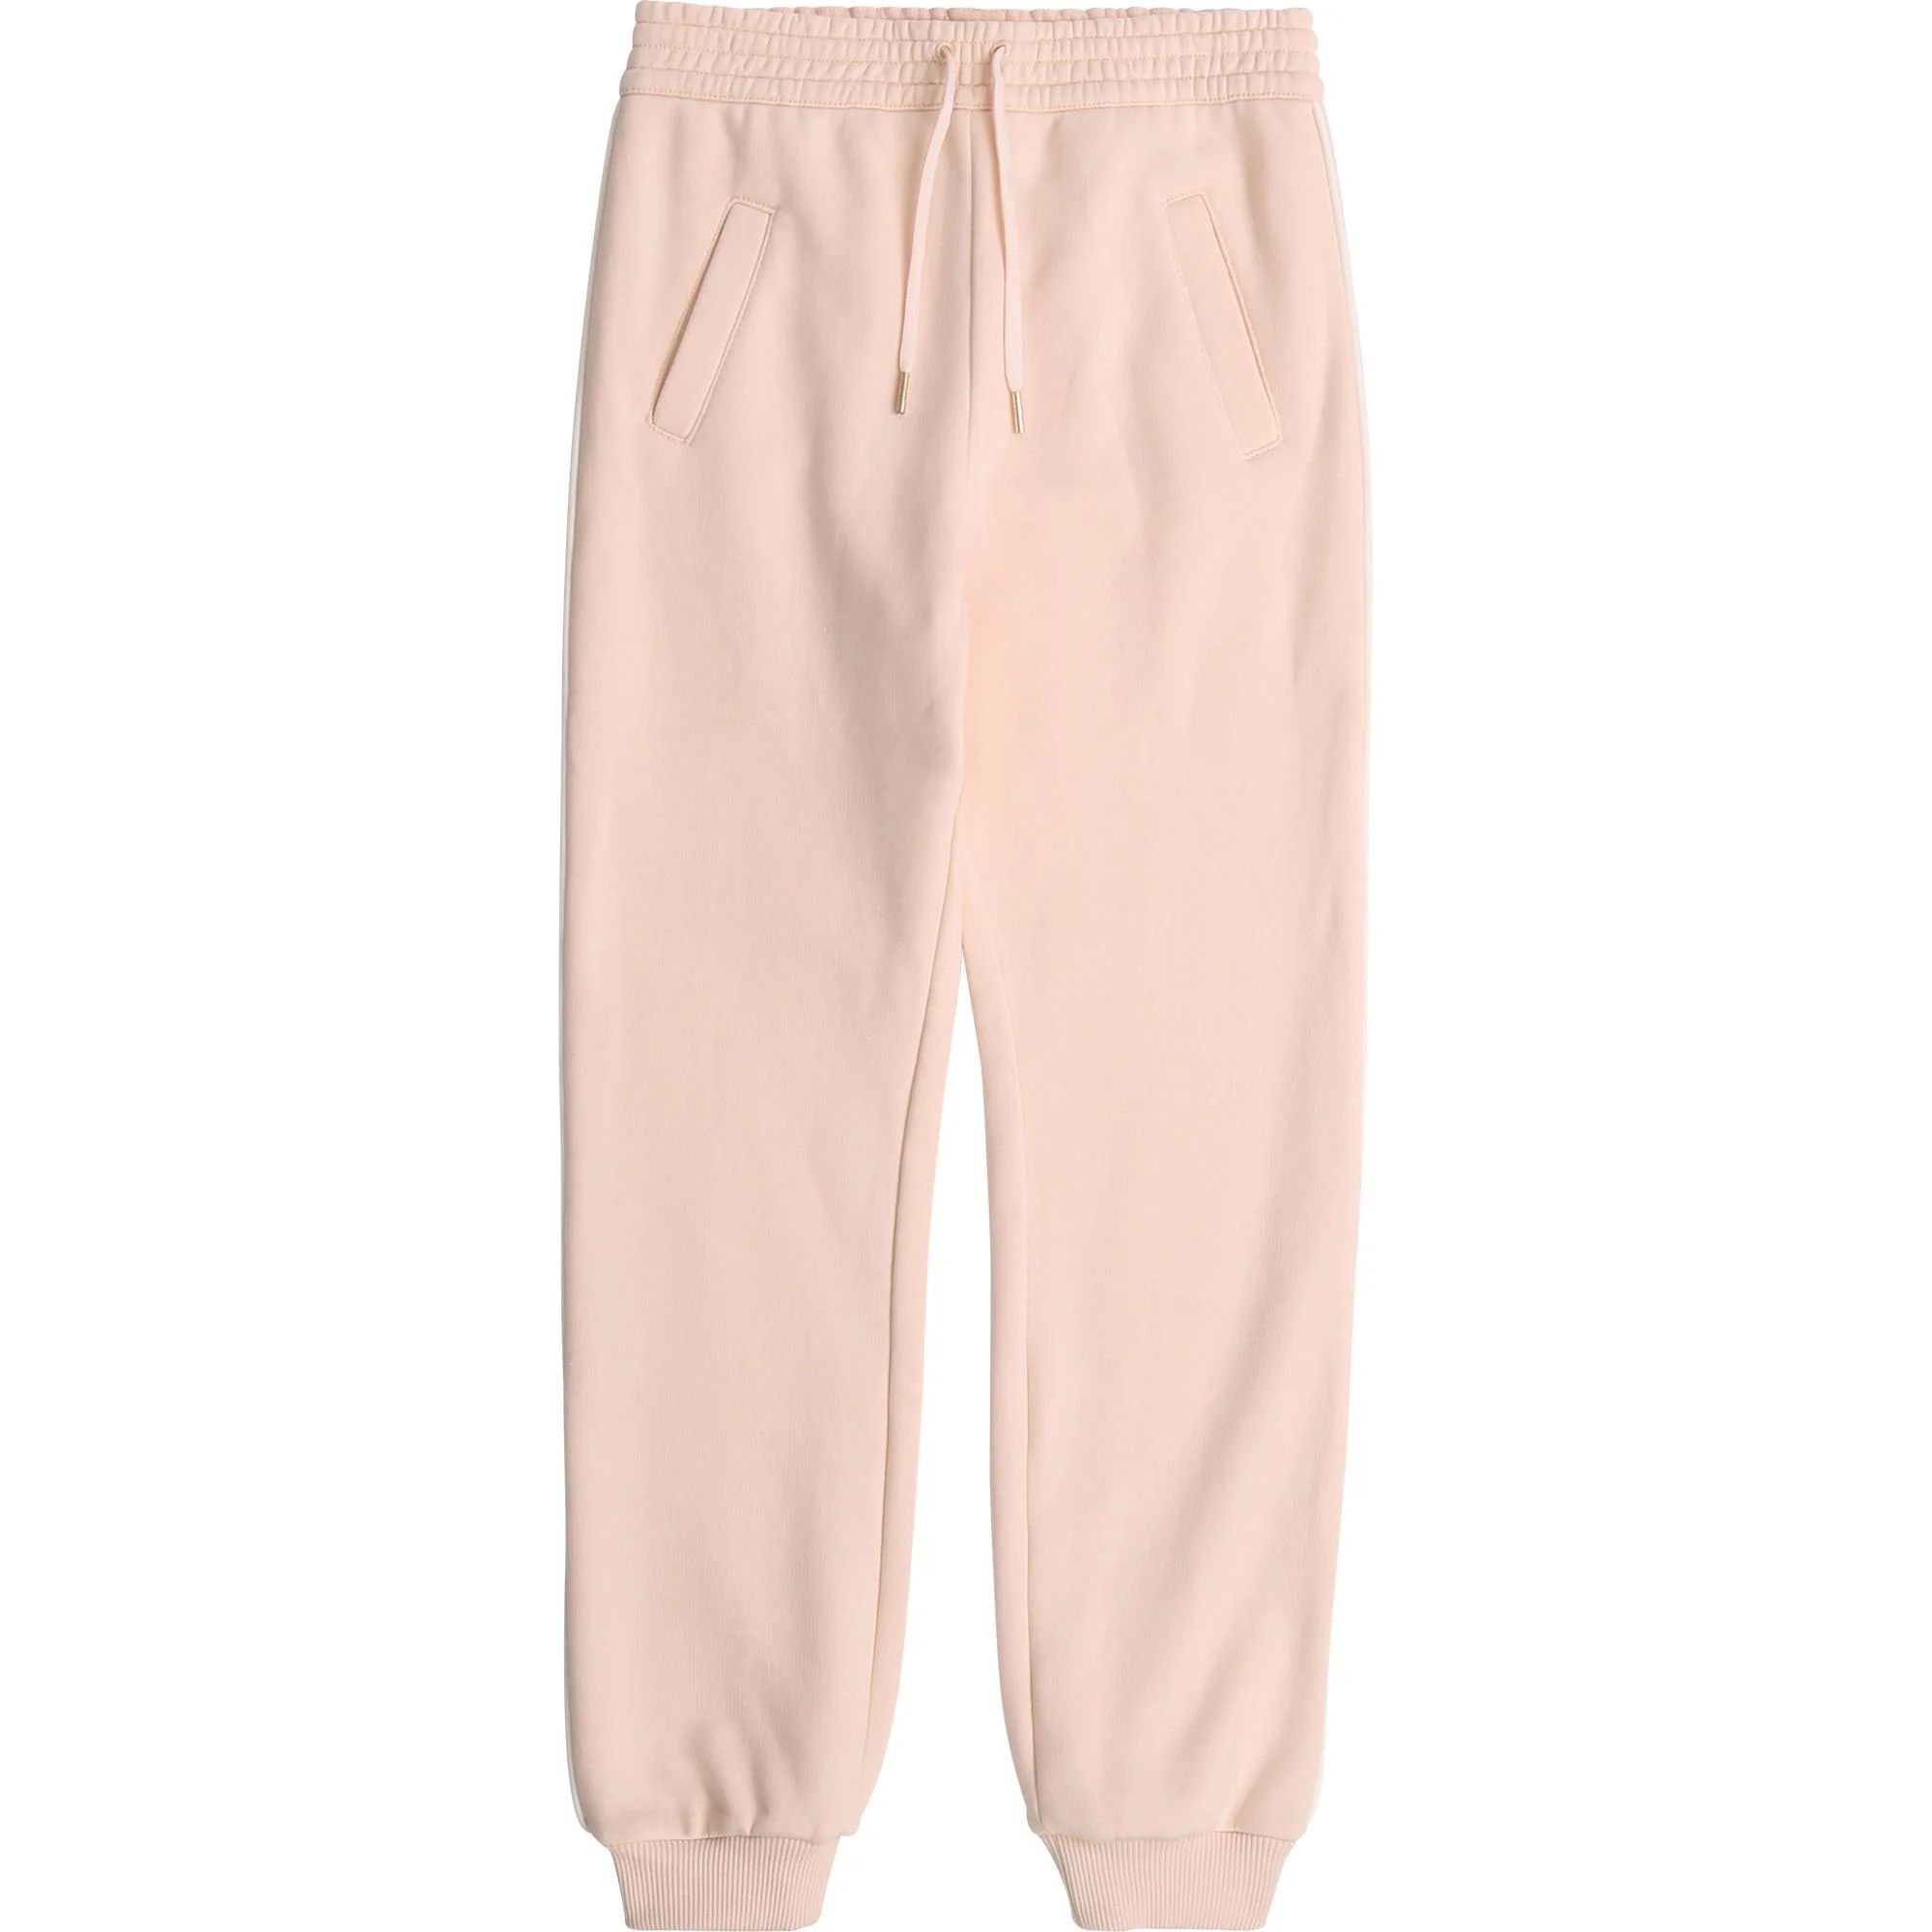 Chloe Girls Cotton Joggers Pink - 14Y PINK | Threads Menswear